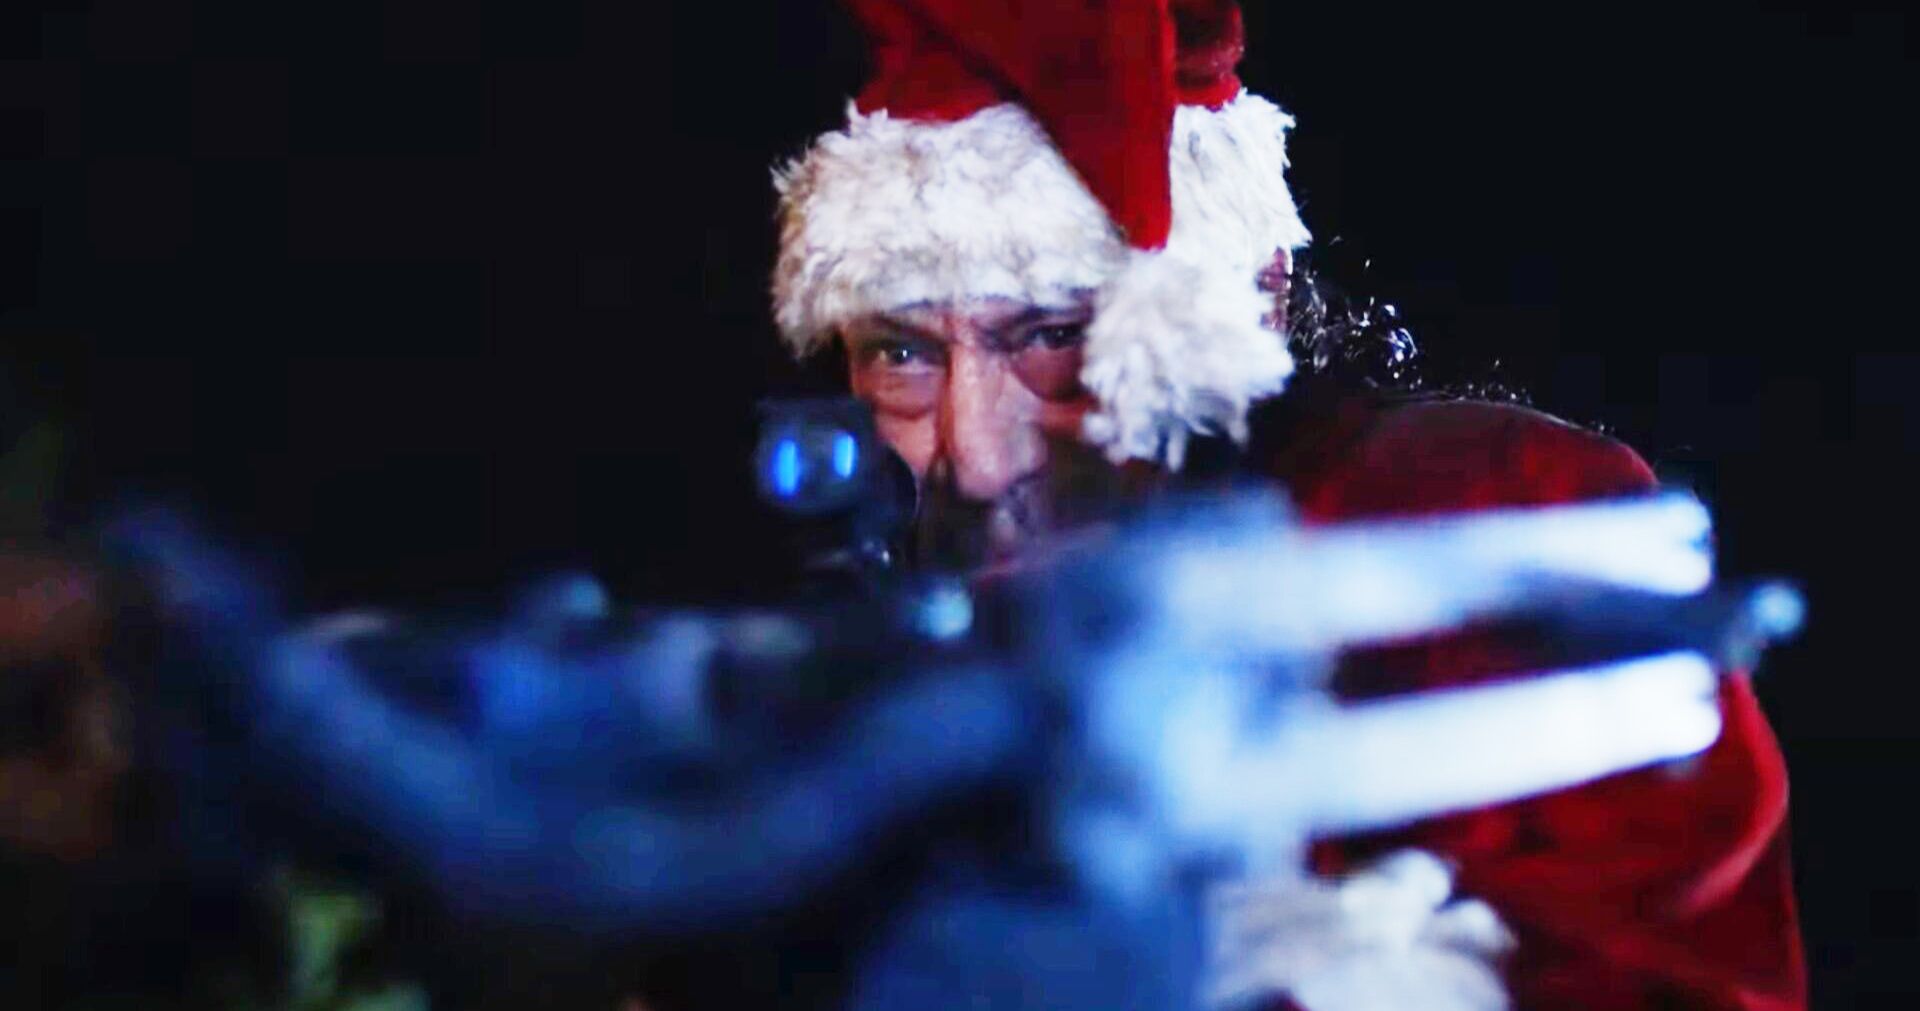 American Horror Stories Trailer Brings the Terror with Danny Trejo as a Killer Santa